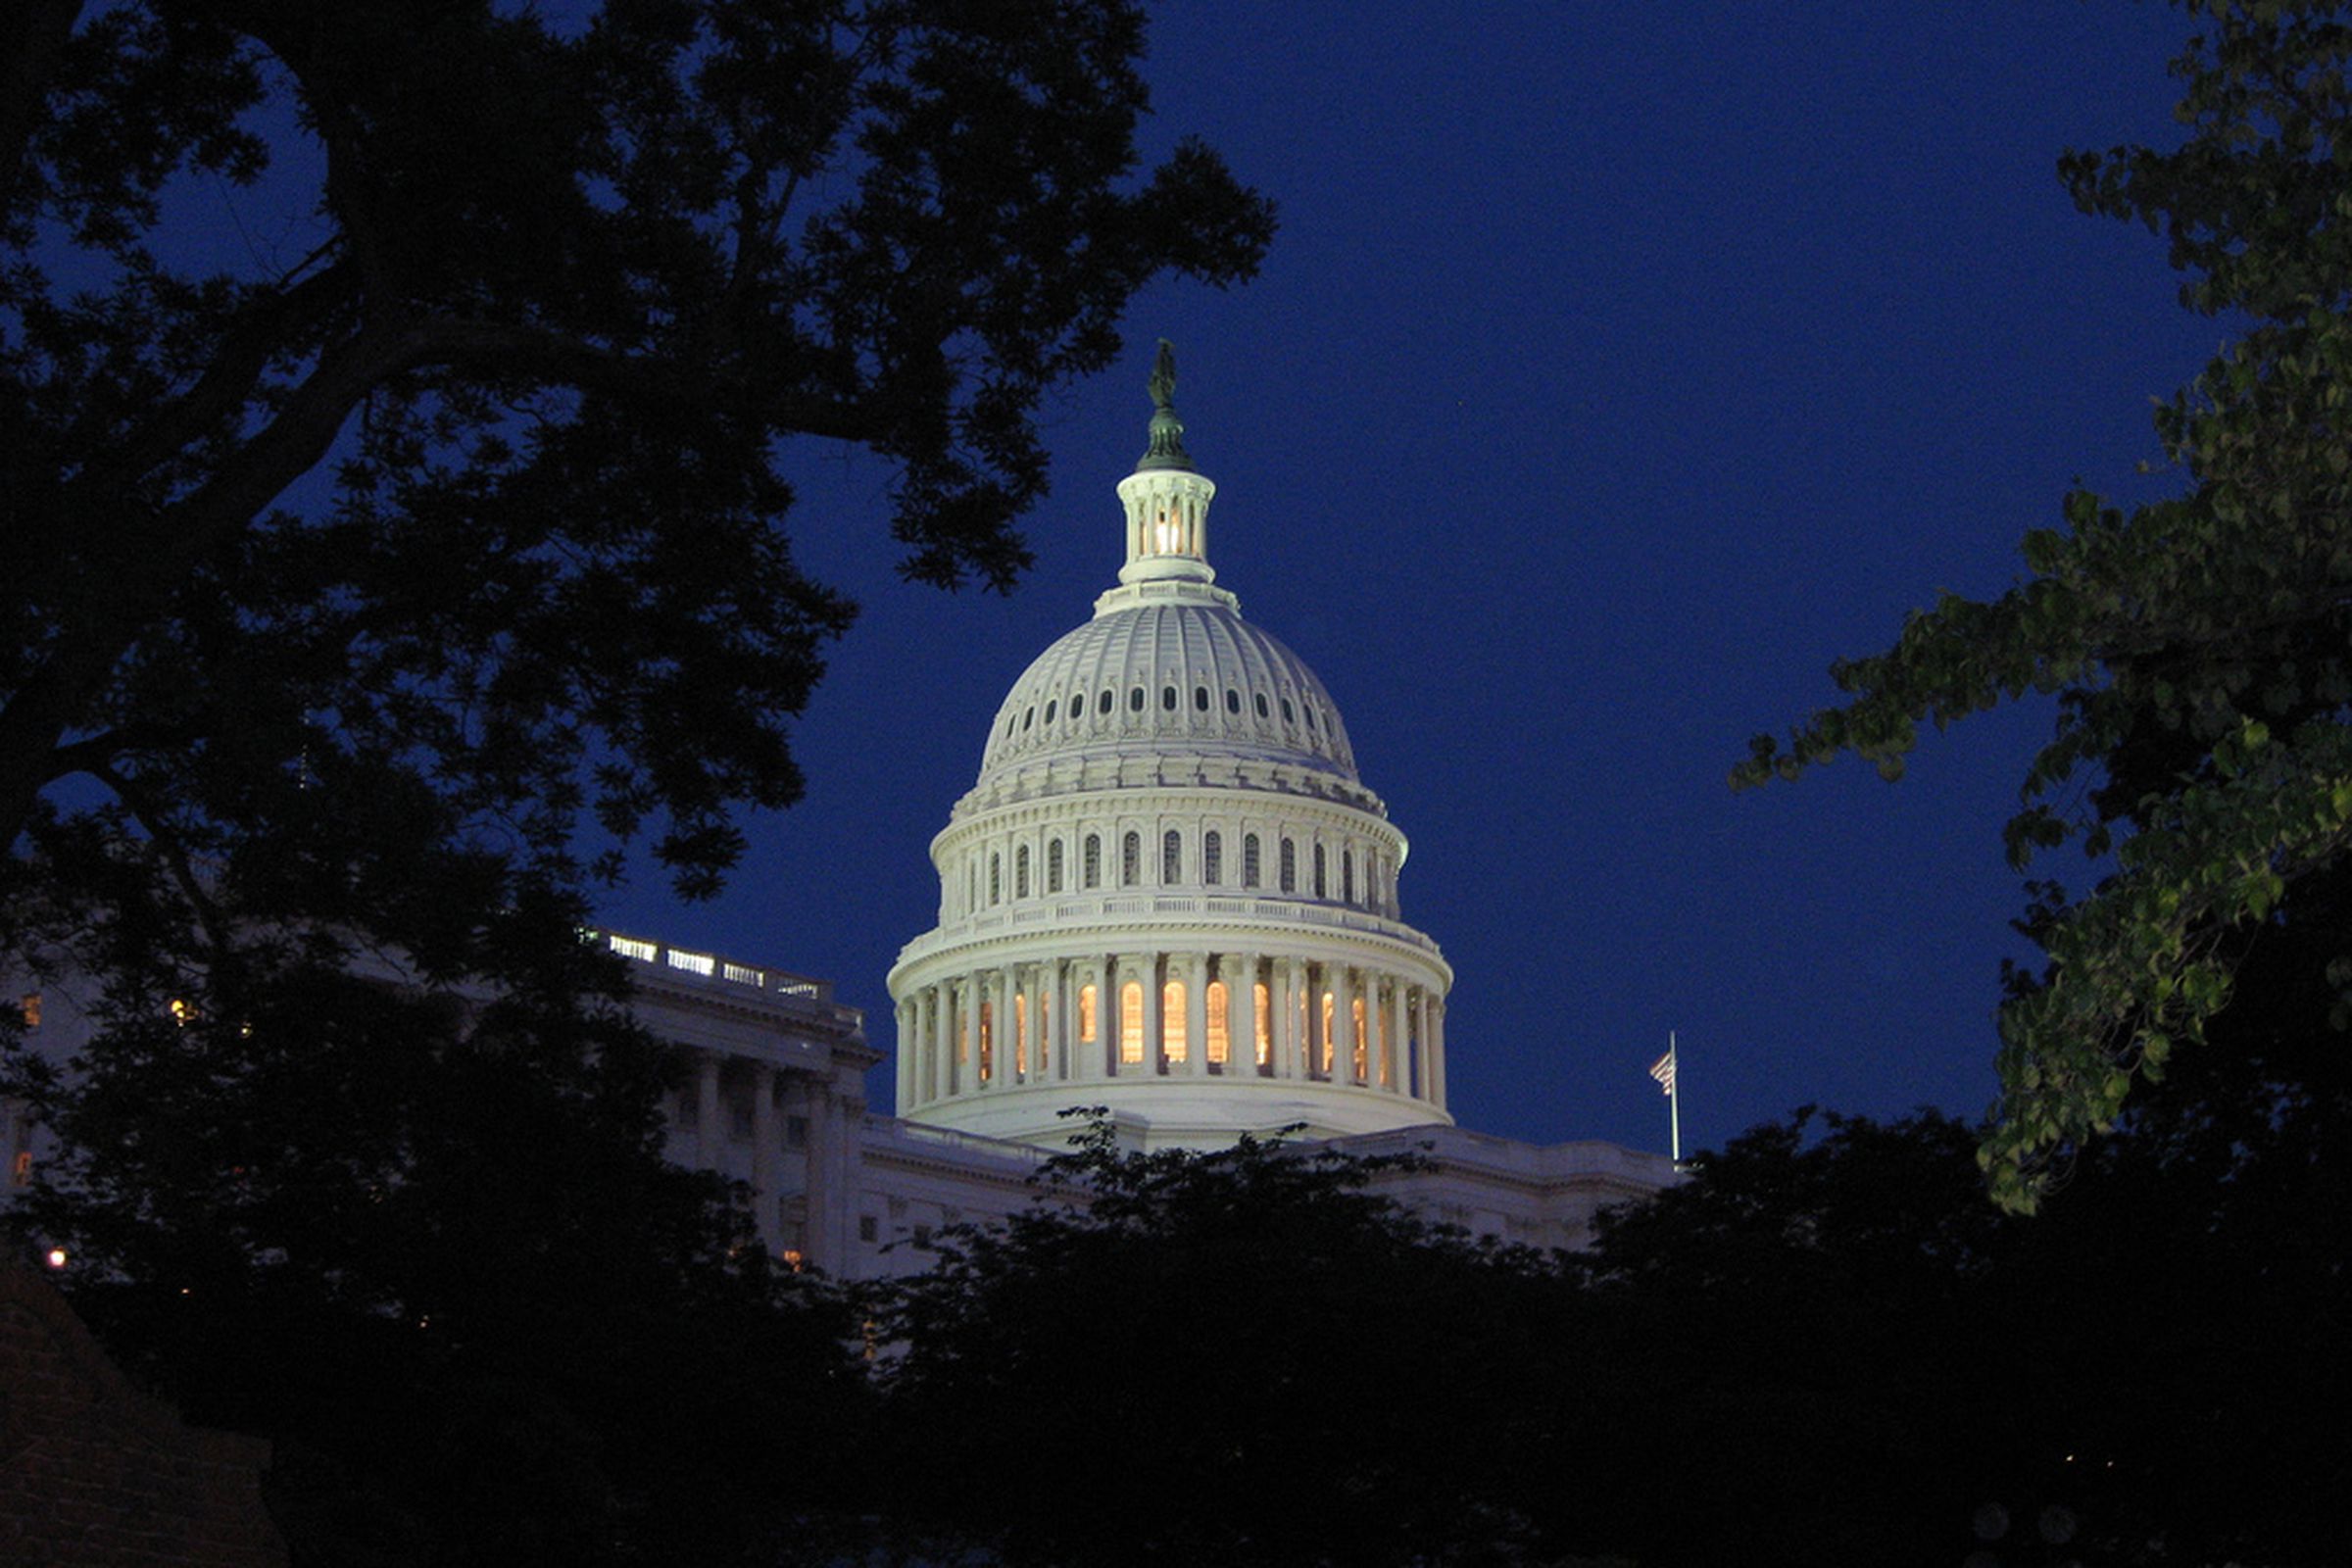 Capitol at Night [by Robero Ceballos via Flickr]